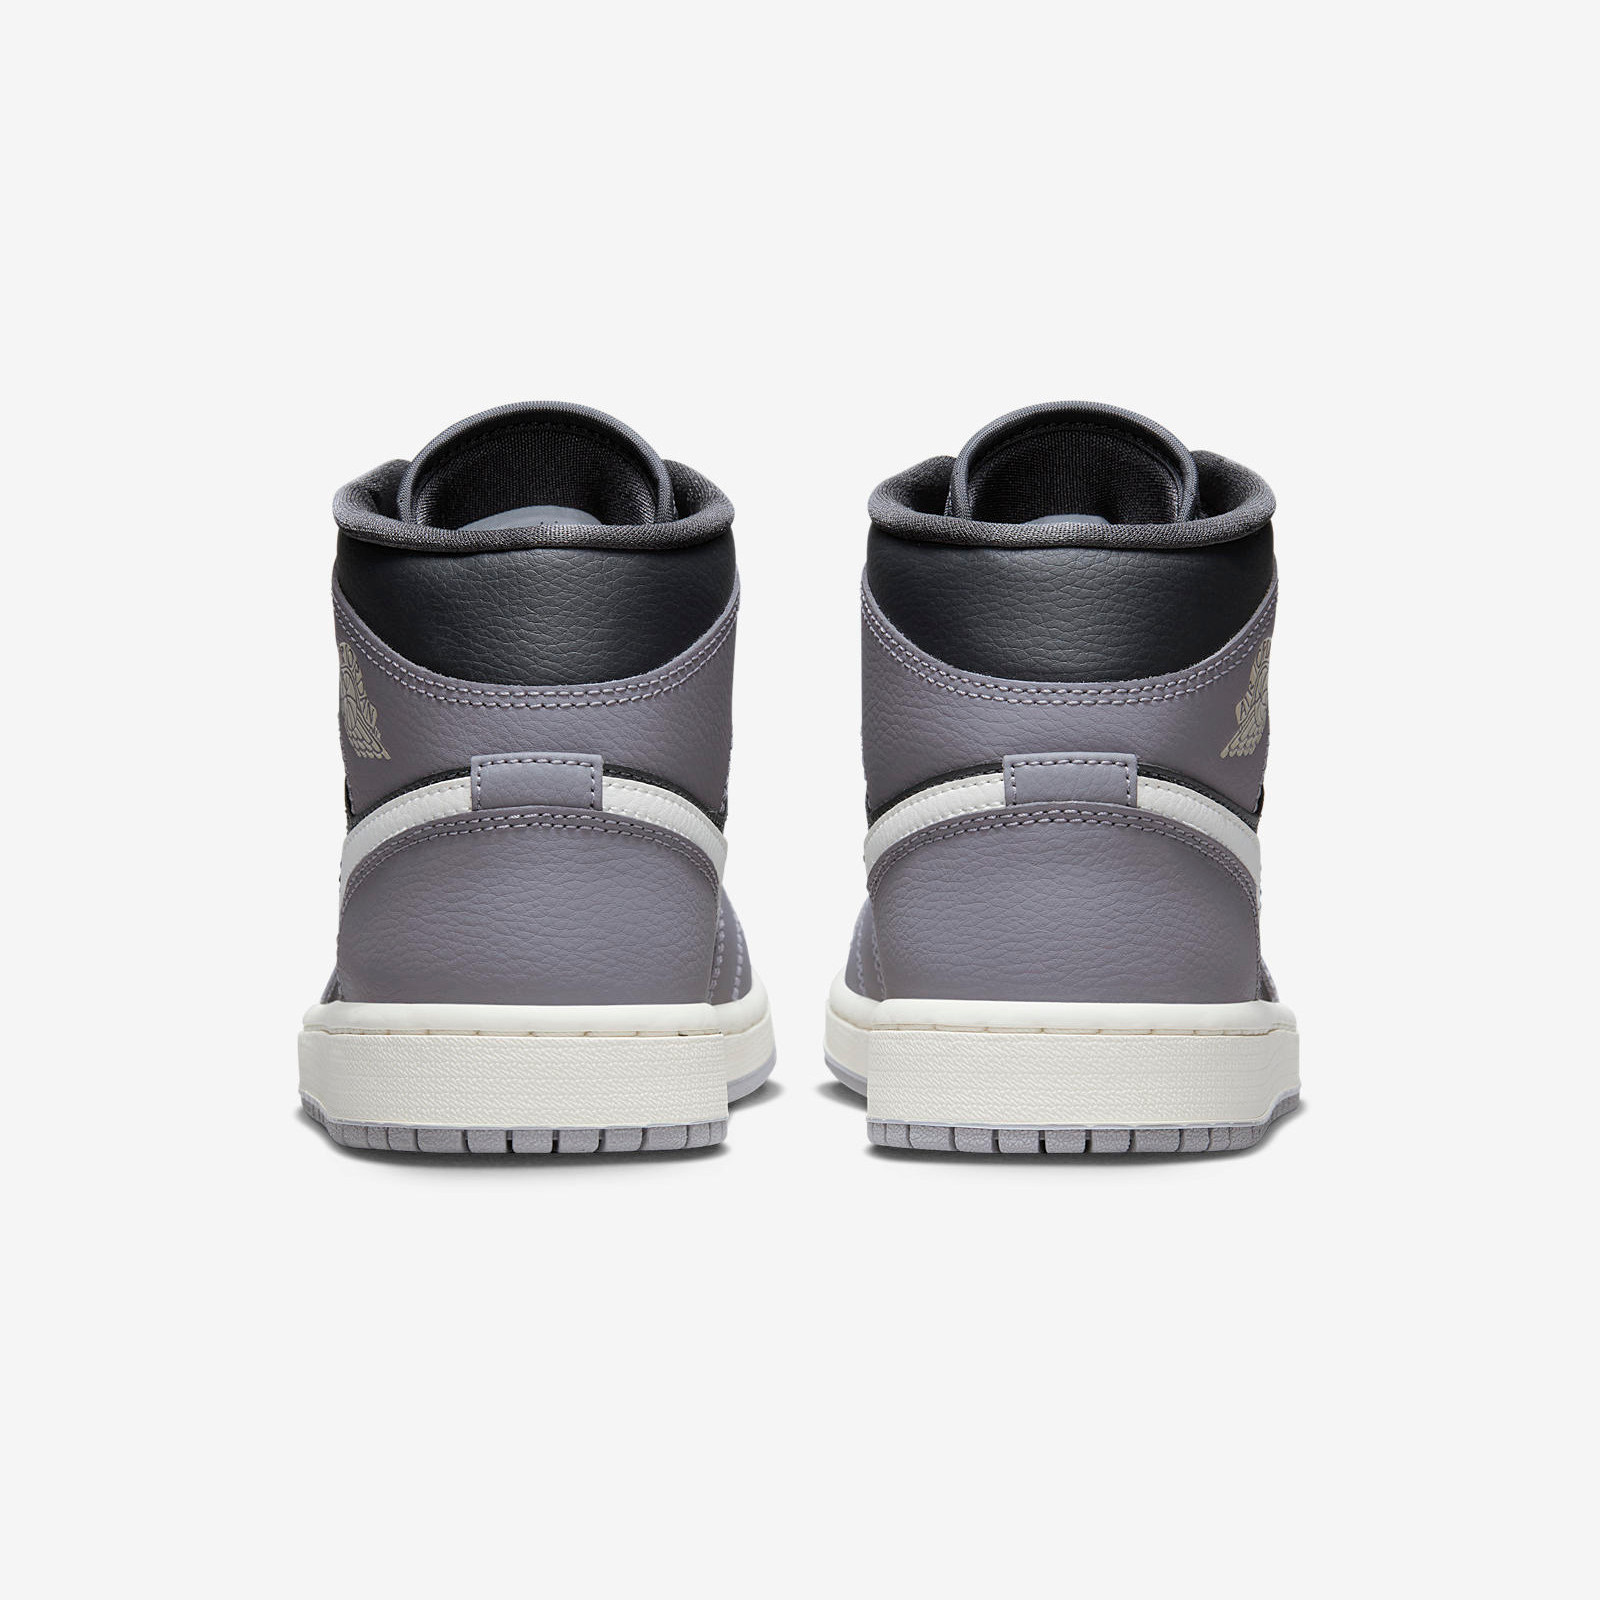 Air Jordan 1 Mid
« Cement Grey »